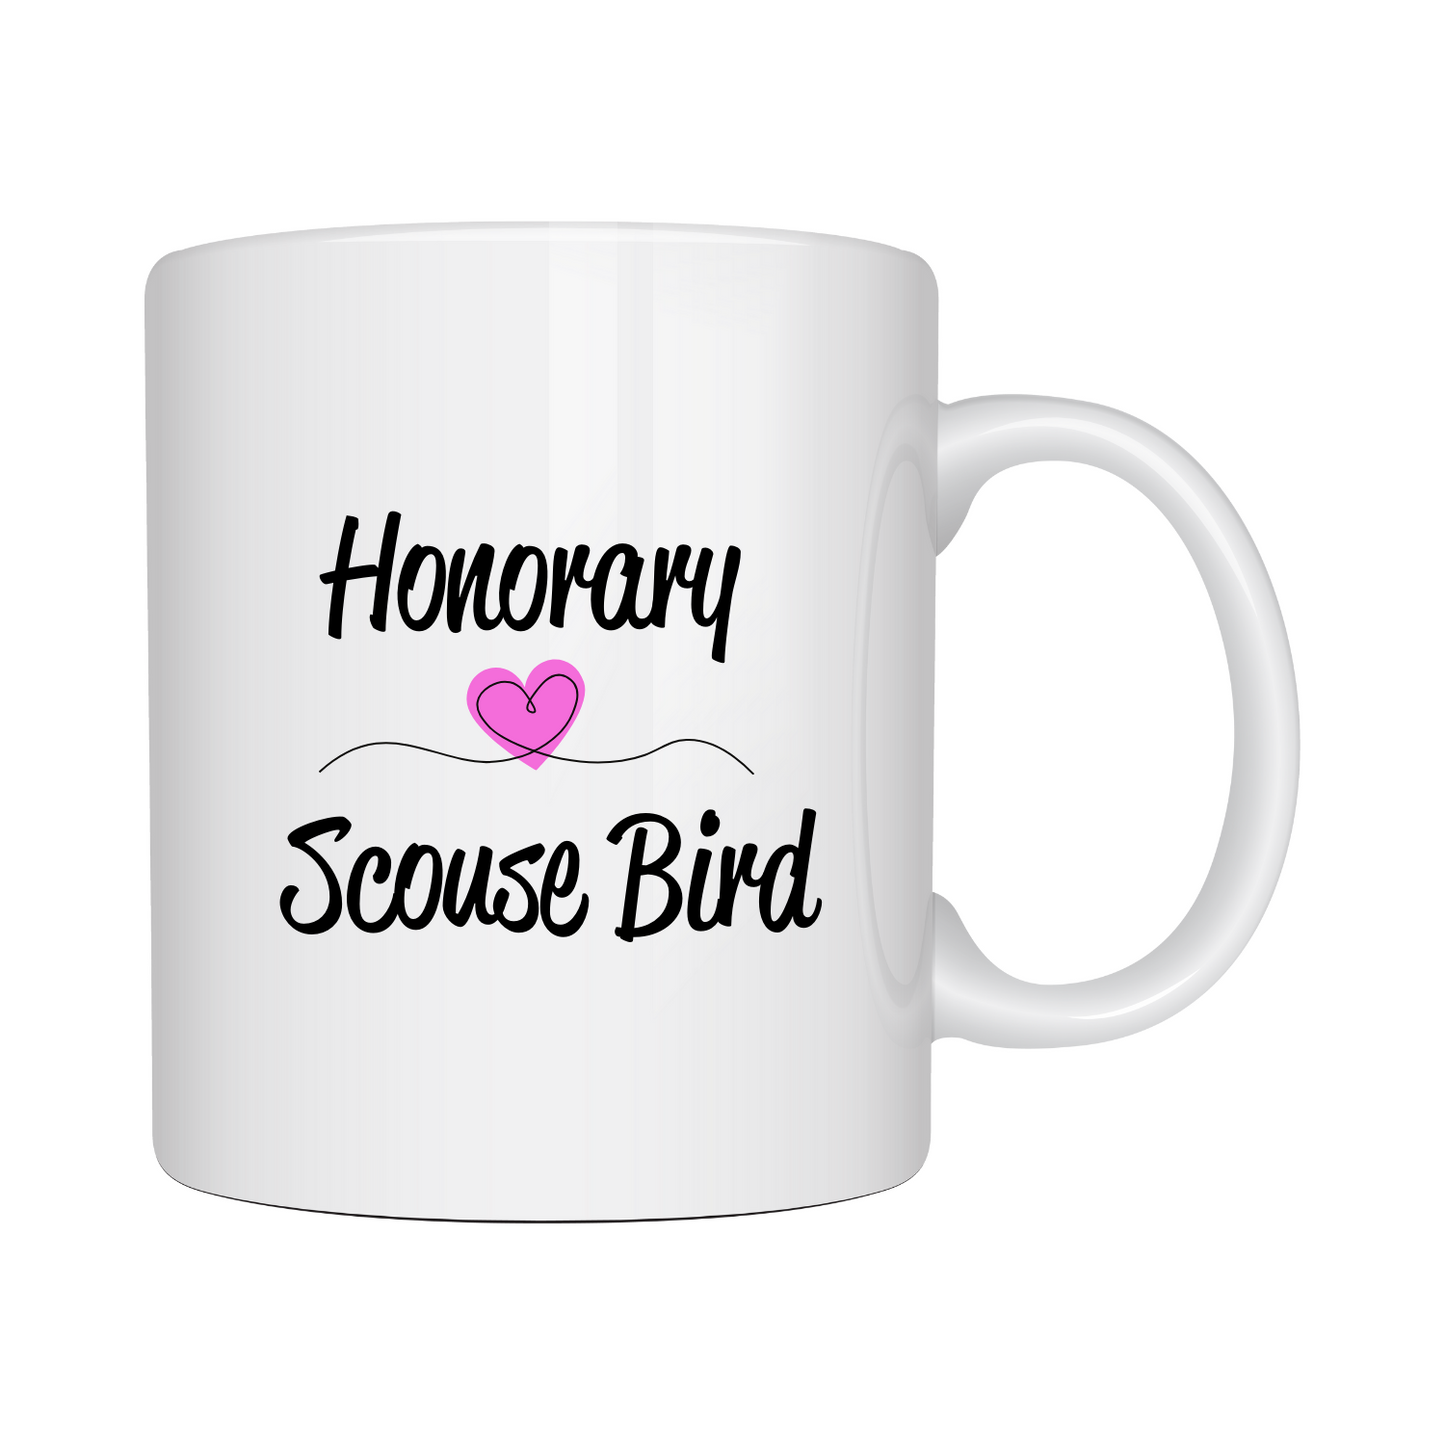 Honorary Scouse Bird Mug